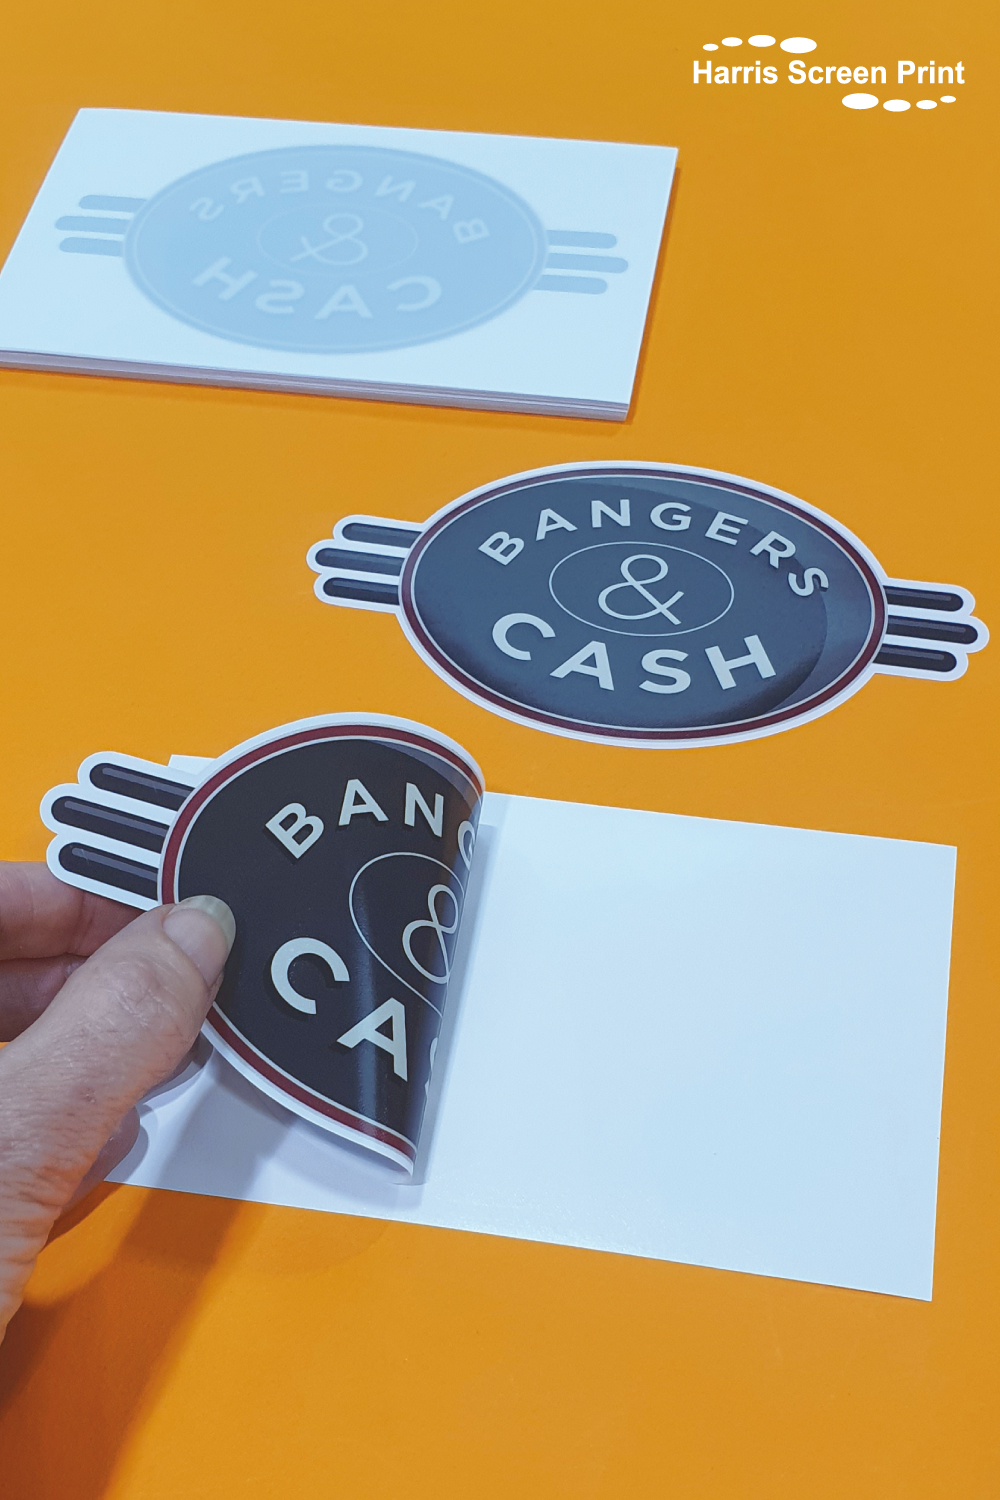 Bangers & Cash Car Stickers special shape